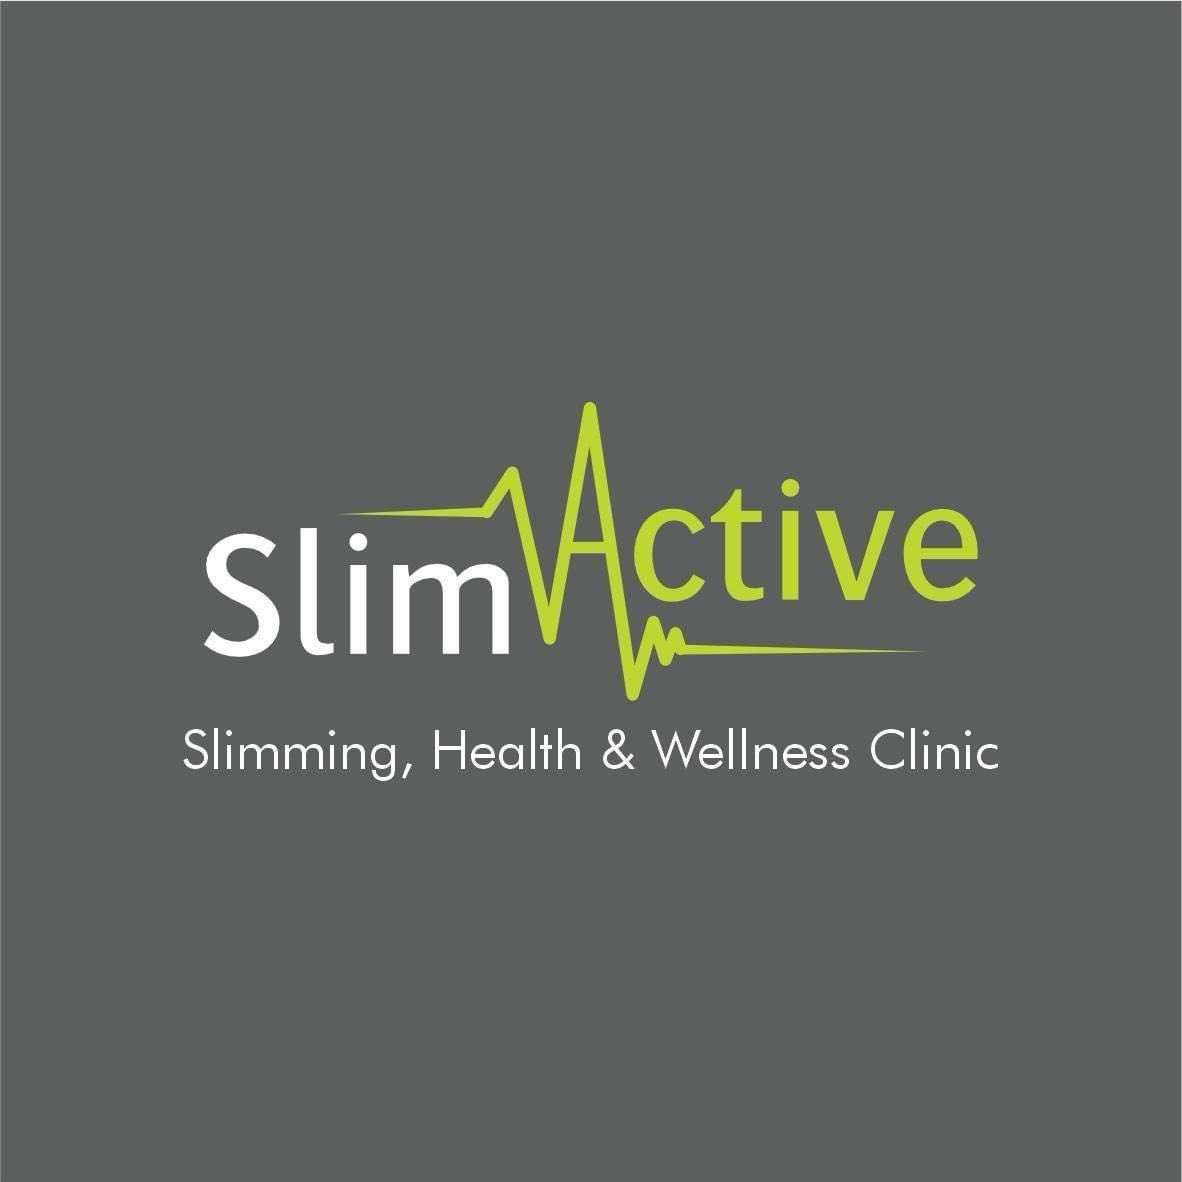 Slim Active - Slimming, Health & Wellness, 384 Lois Ave, Waterkloof Glen, 0181, Pretoria